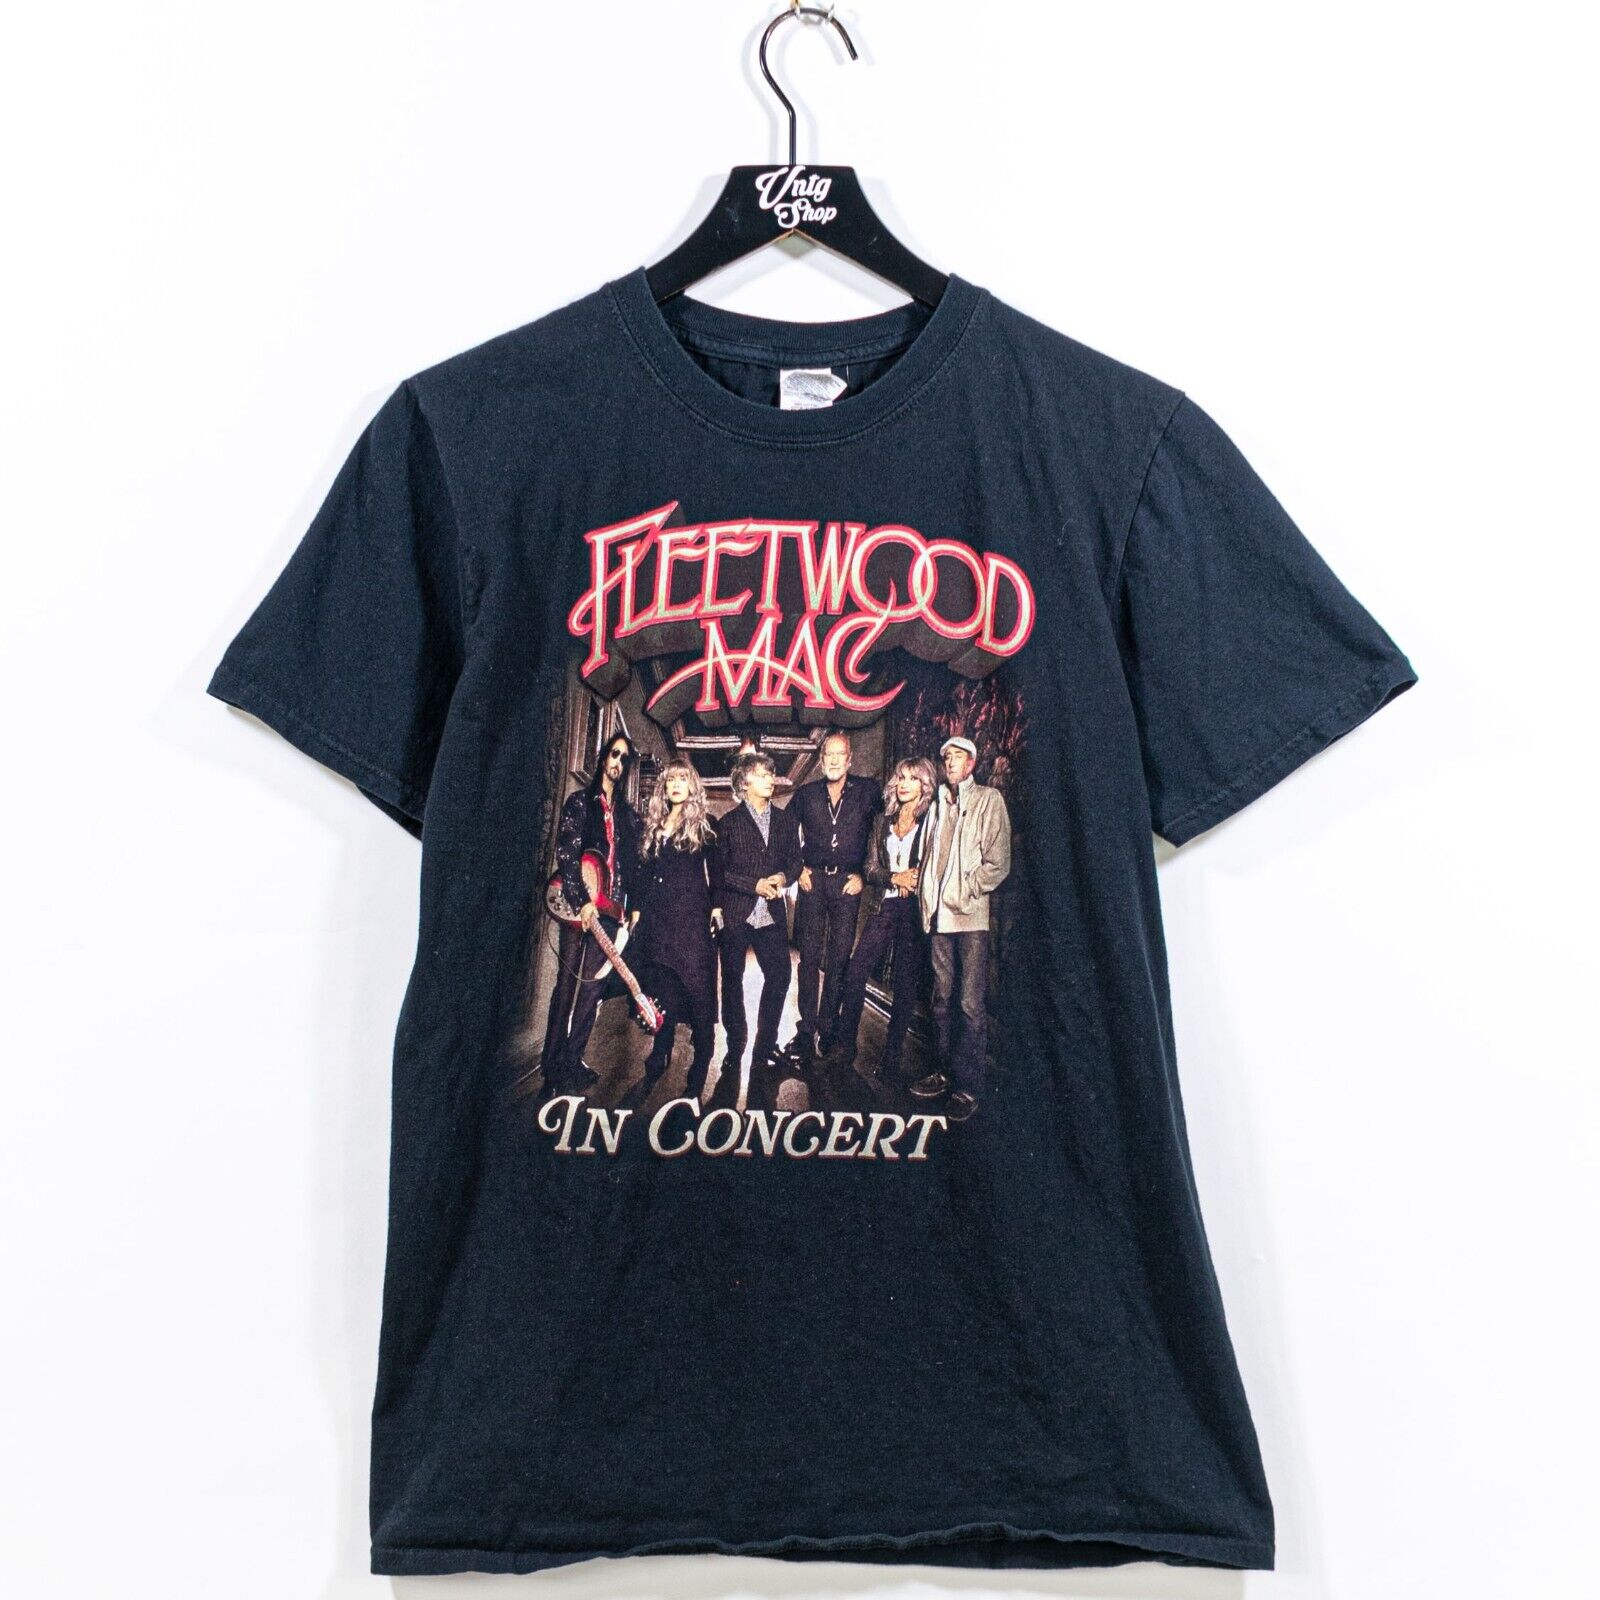 Fleetwood Mac In Concert Tour T-Shirt Medium 2018 2019 Band Rock Music